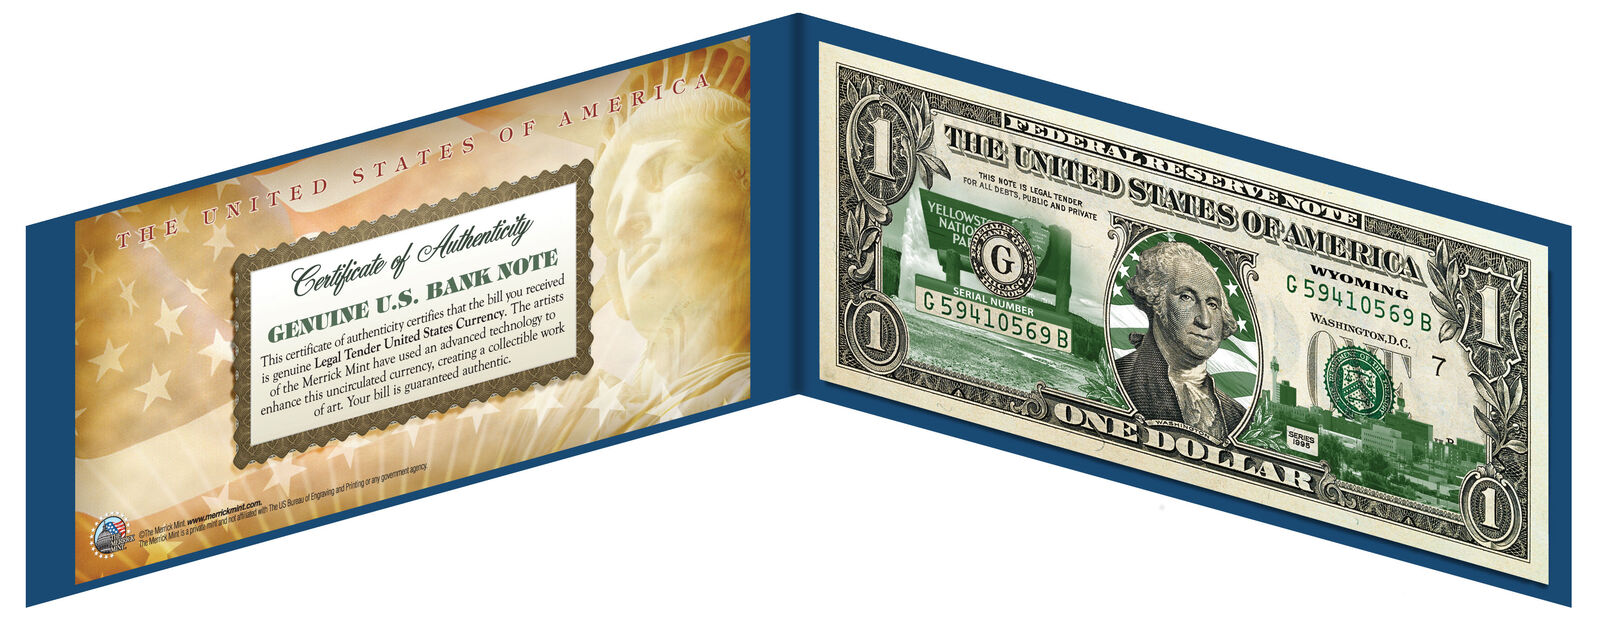 WYOMING State $1 Bill *Genuine Legal Tender* U.S. One-Dollar Currency *Green*